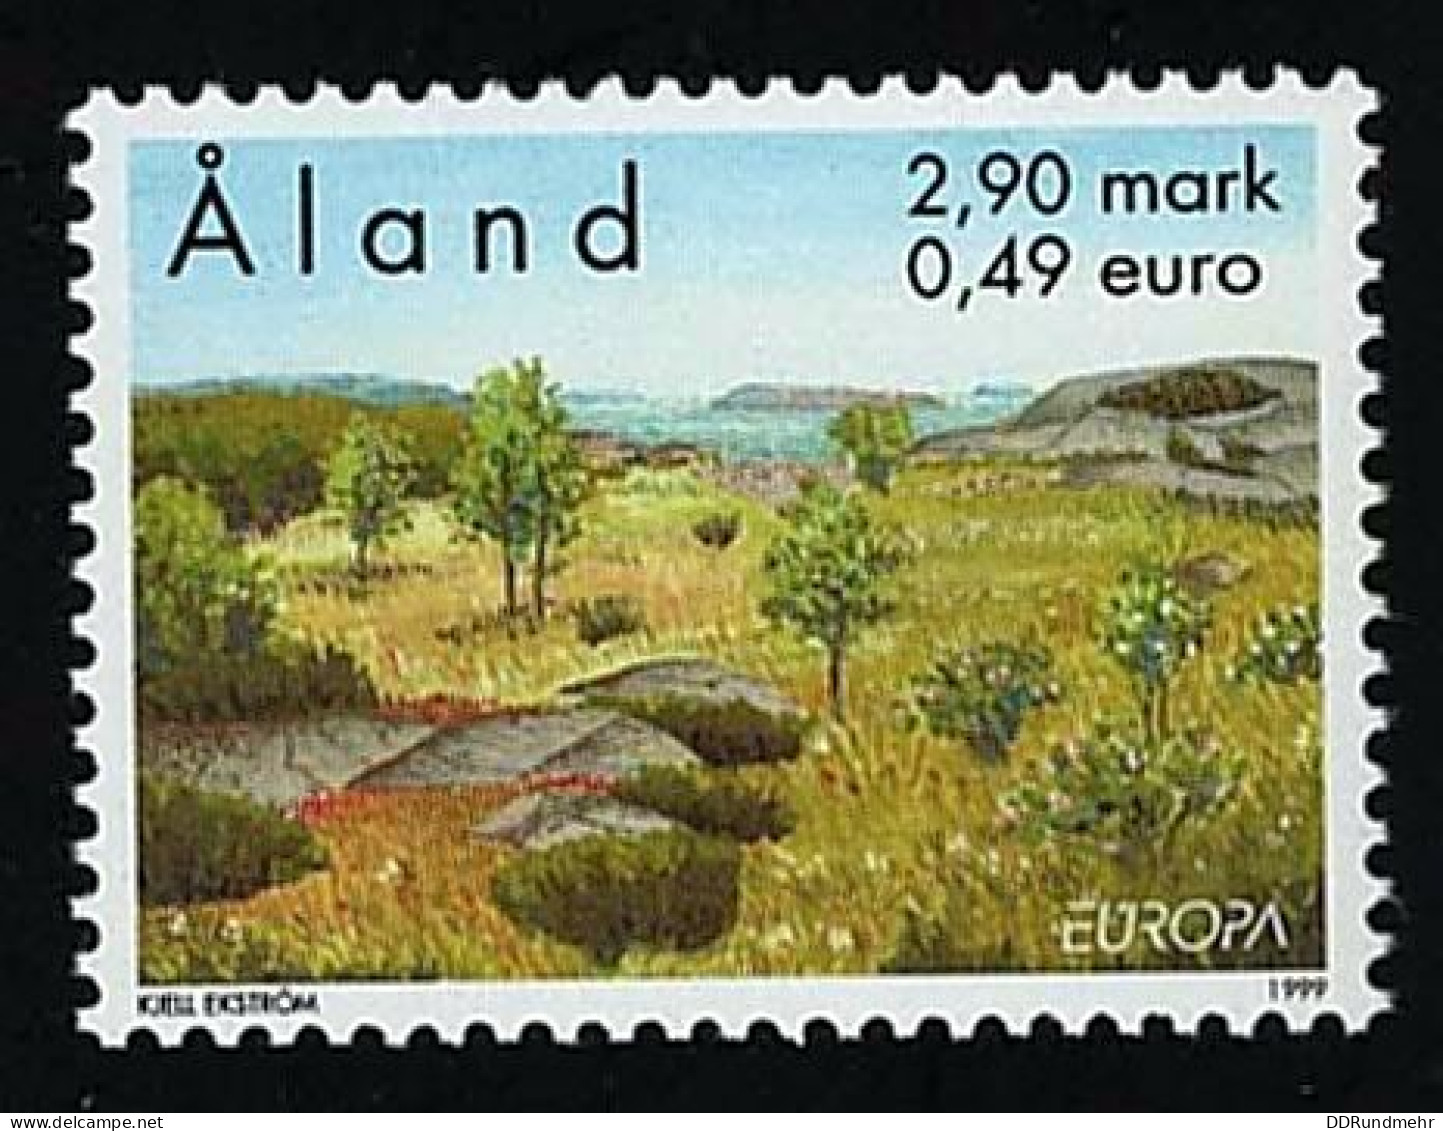 1999 Europa Michel AX 157 Stamp Number AX 157 Yvert Et Tellier AX 156 Stanley Gibbons AX 153 AFA AX 157 Xx MNH - Aland